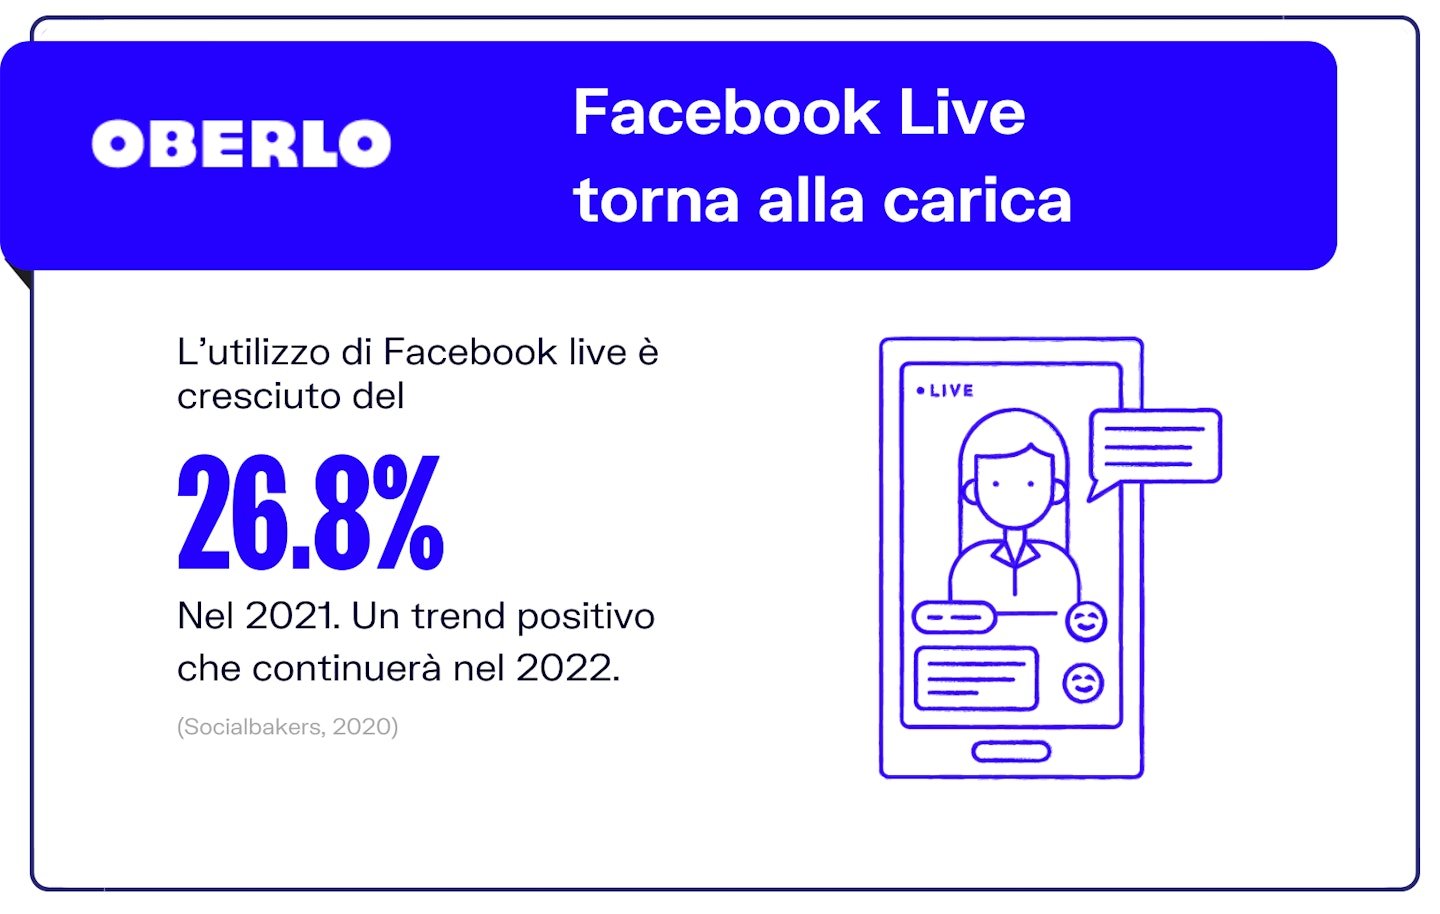 Facebook trends: Facebook Live